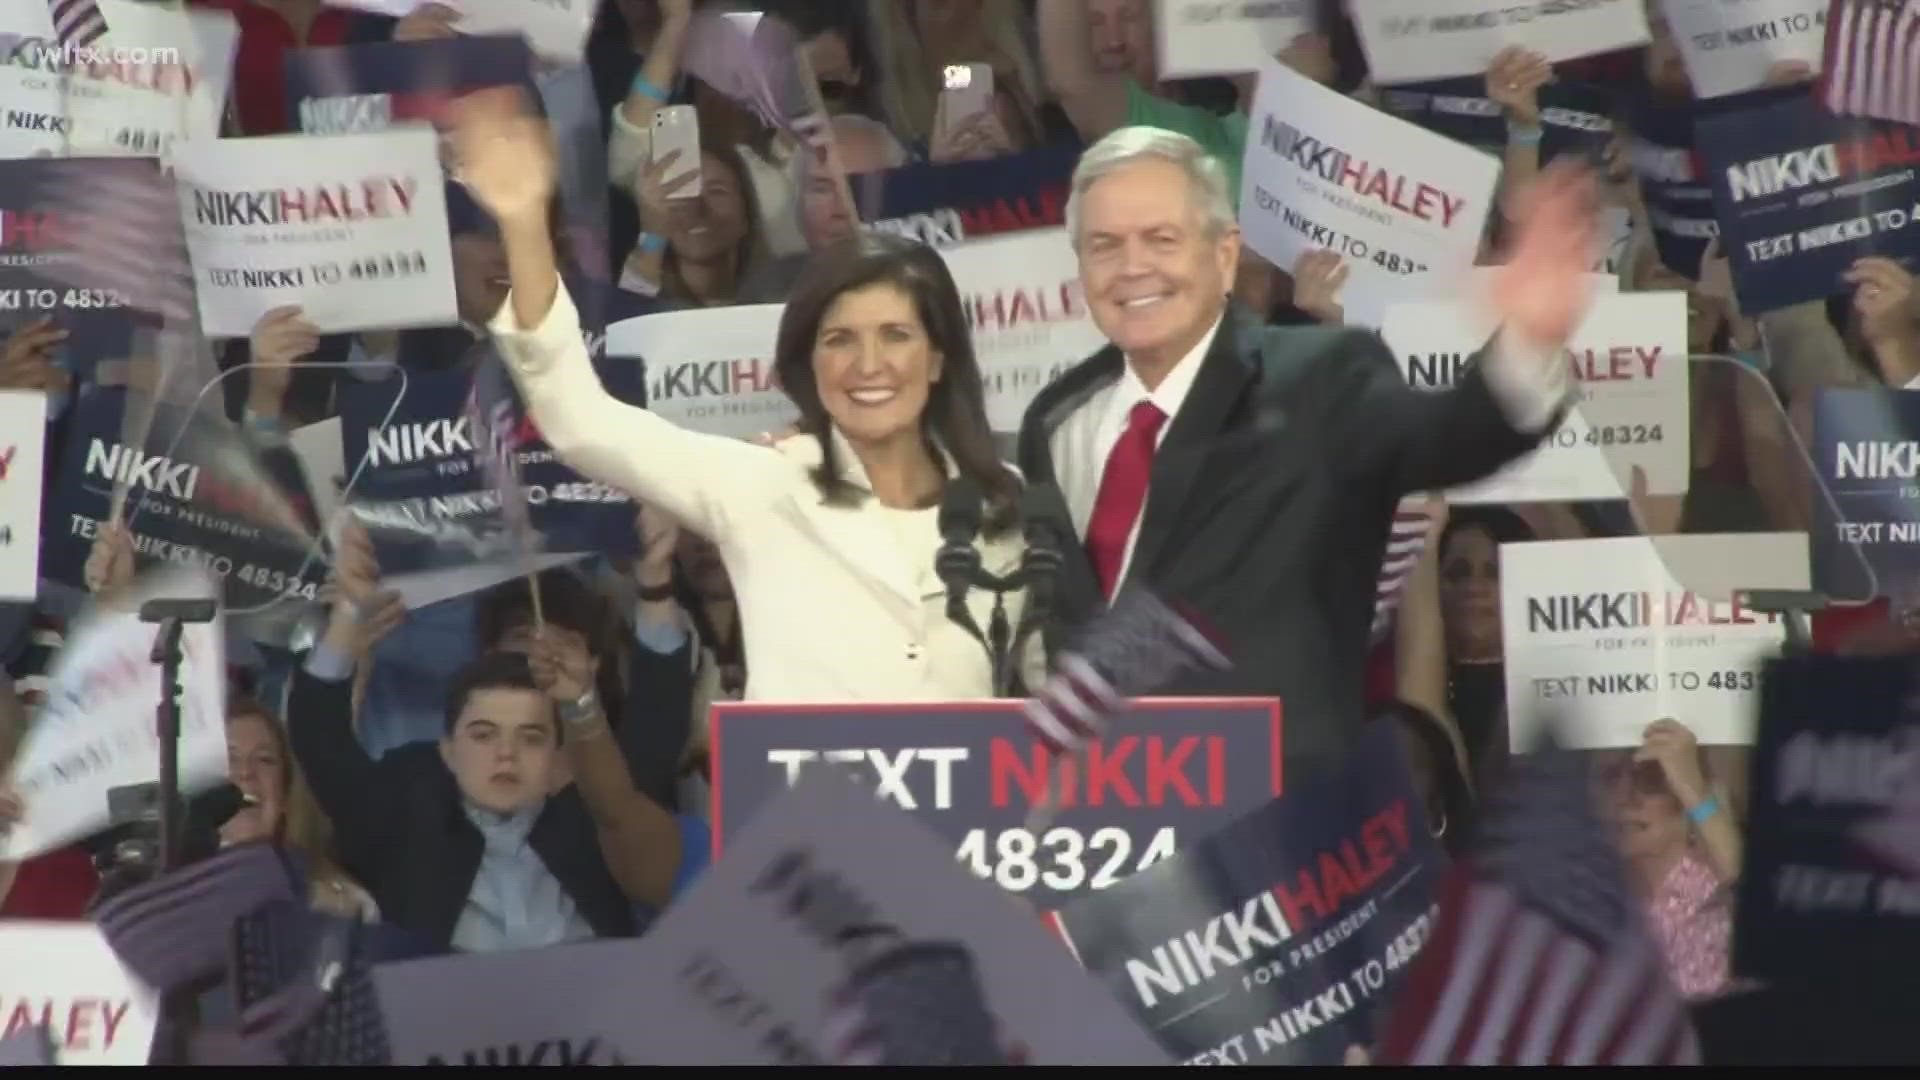 Former Gov. Nikki Haley kicked off her run for president today in Charleston.